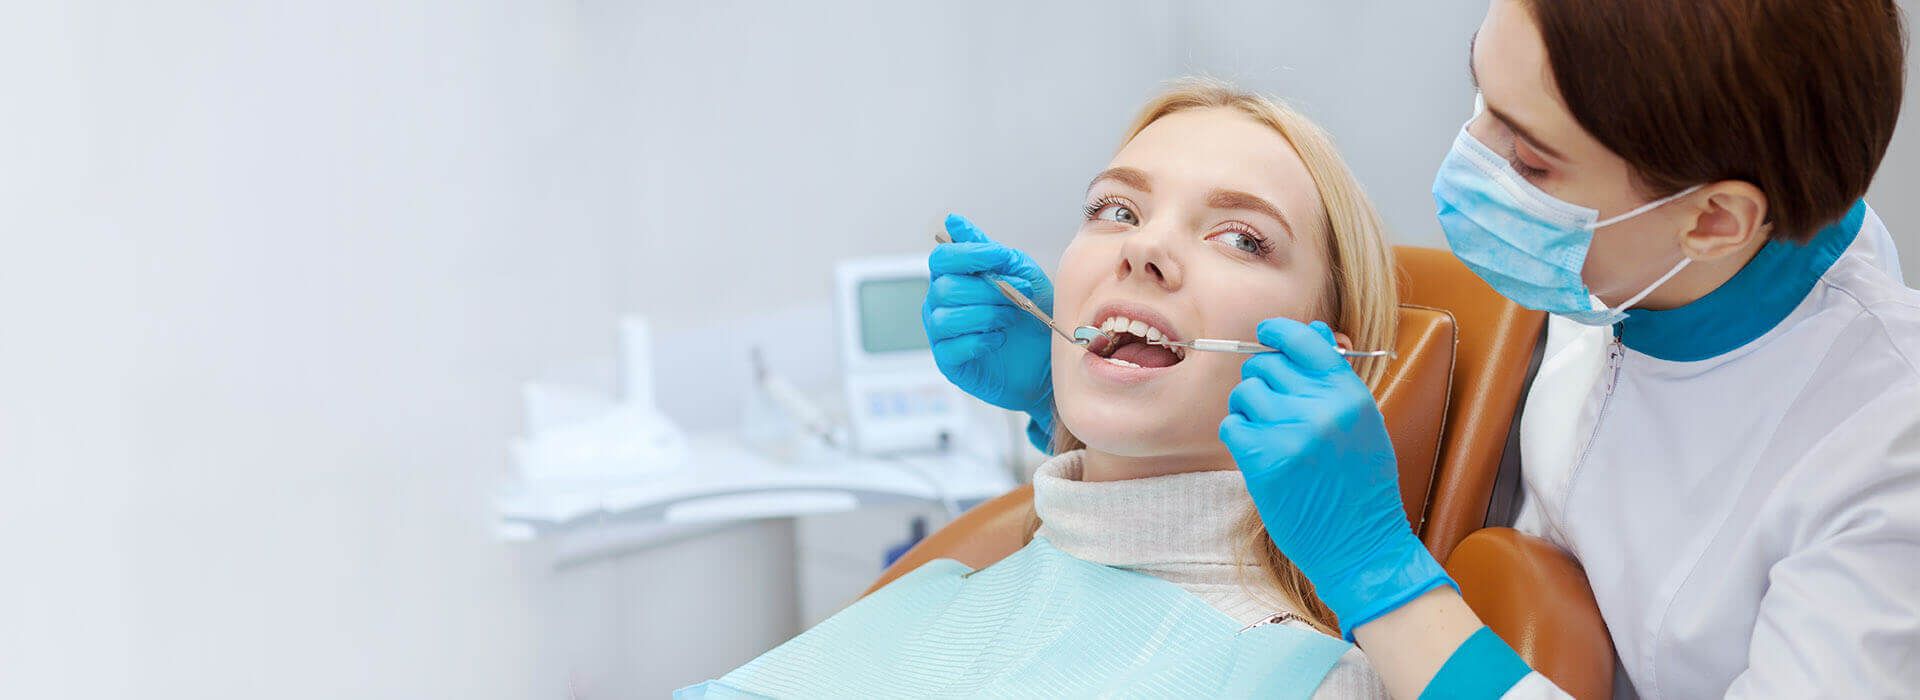 Dental Emergency in Craigieburn, Dazzling Smiles dental